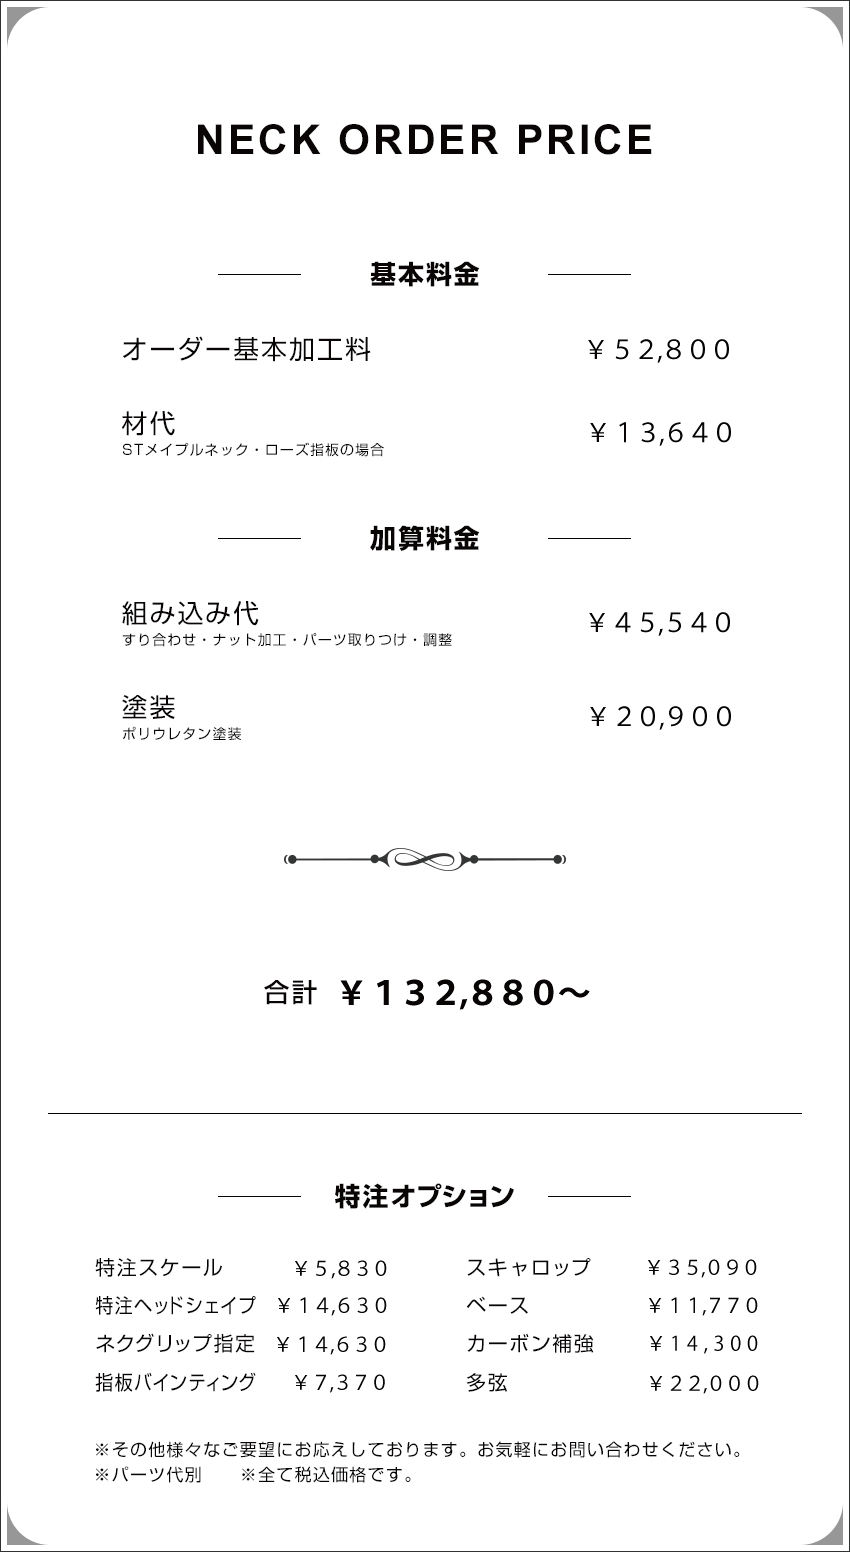 NECK ORDER PRICE｜ネックオーダー料金